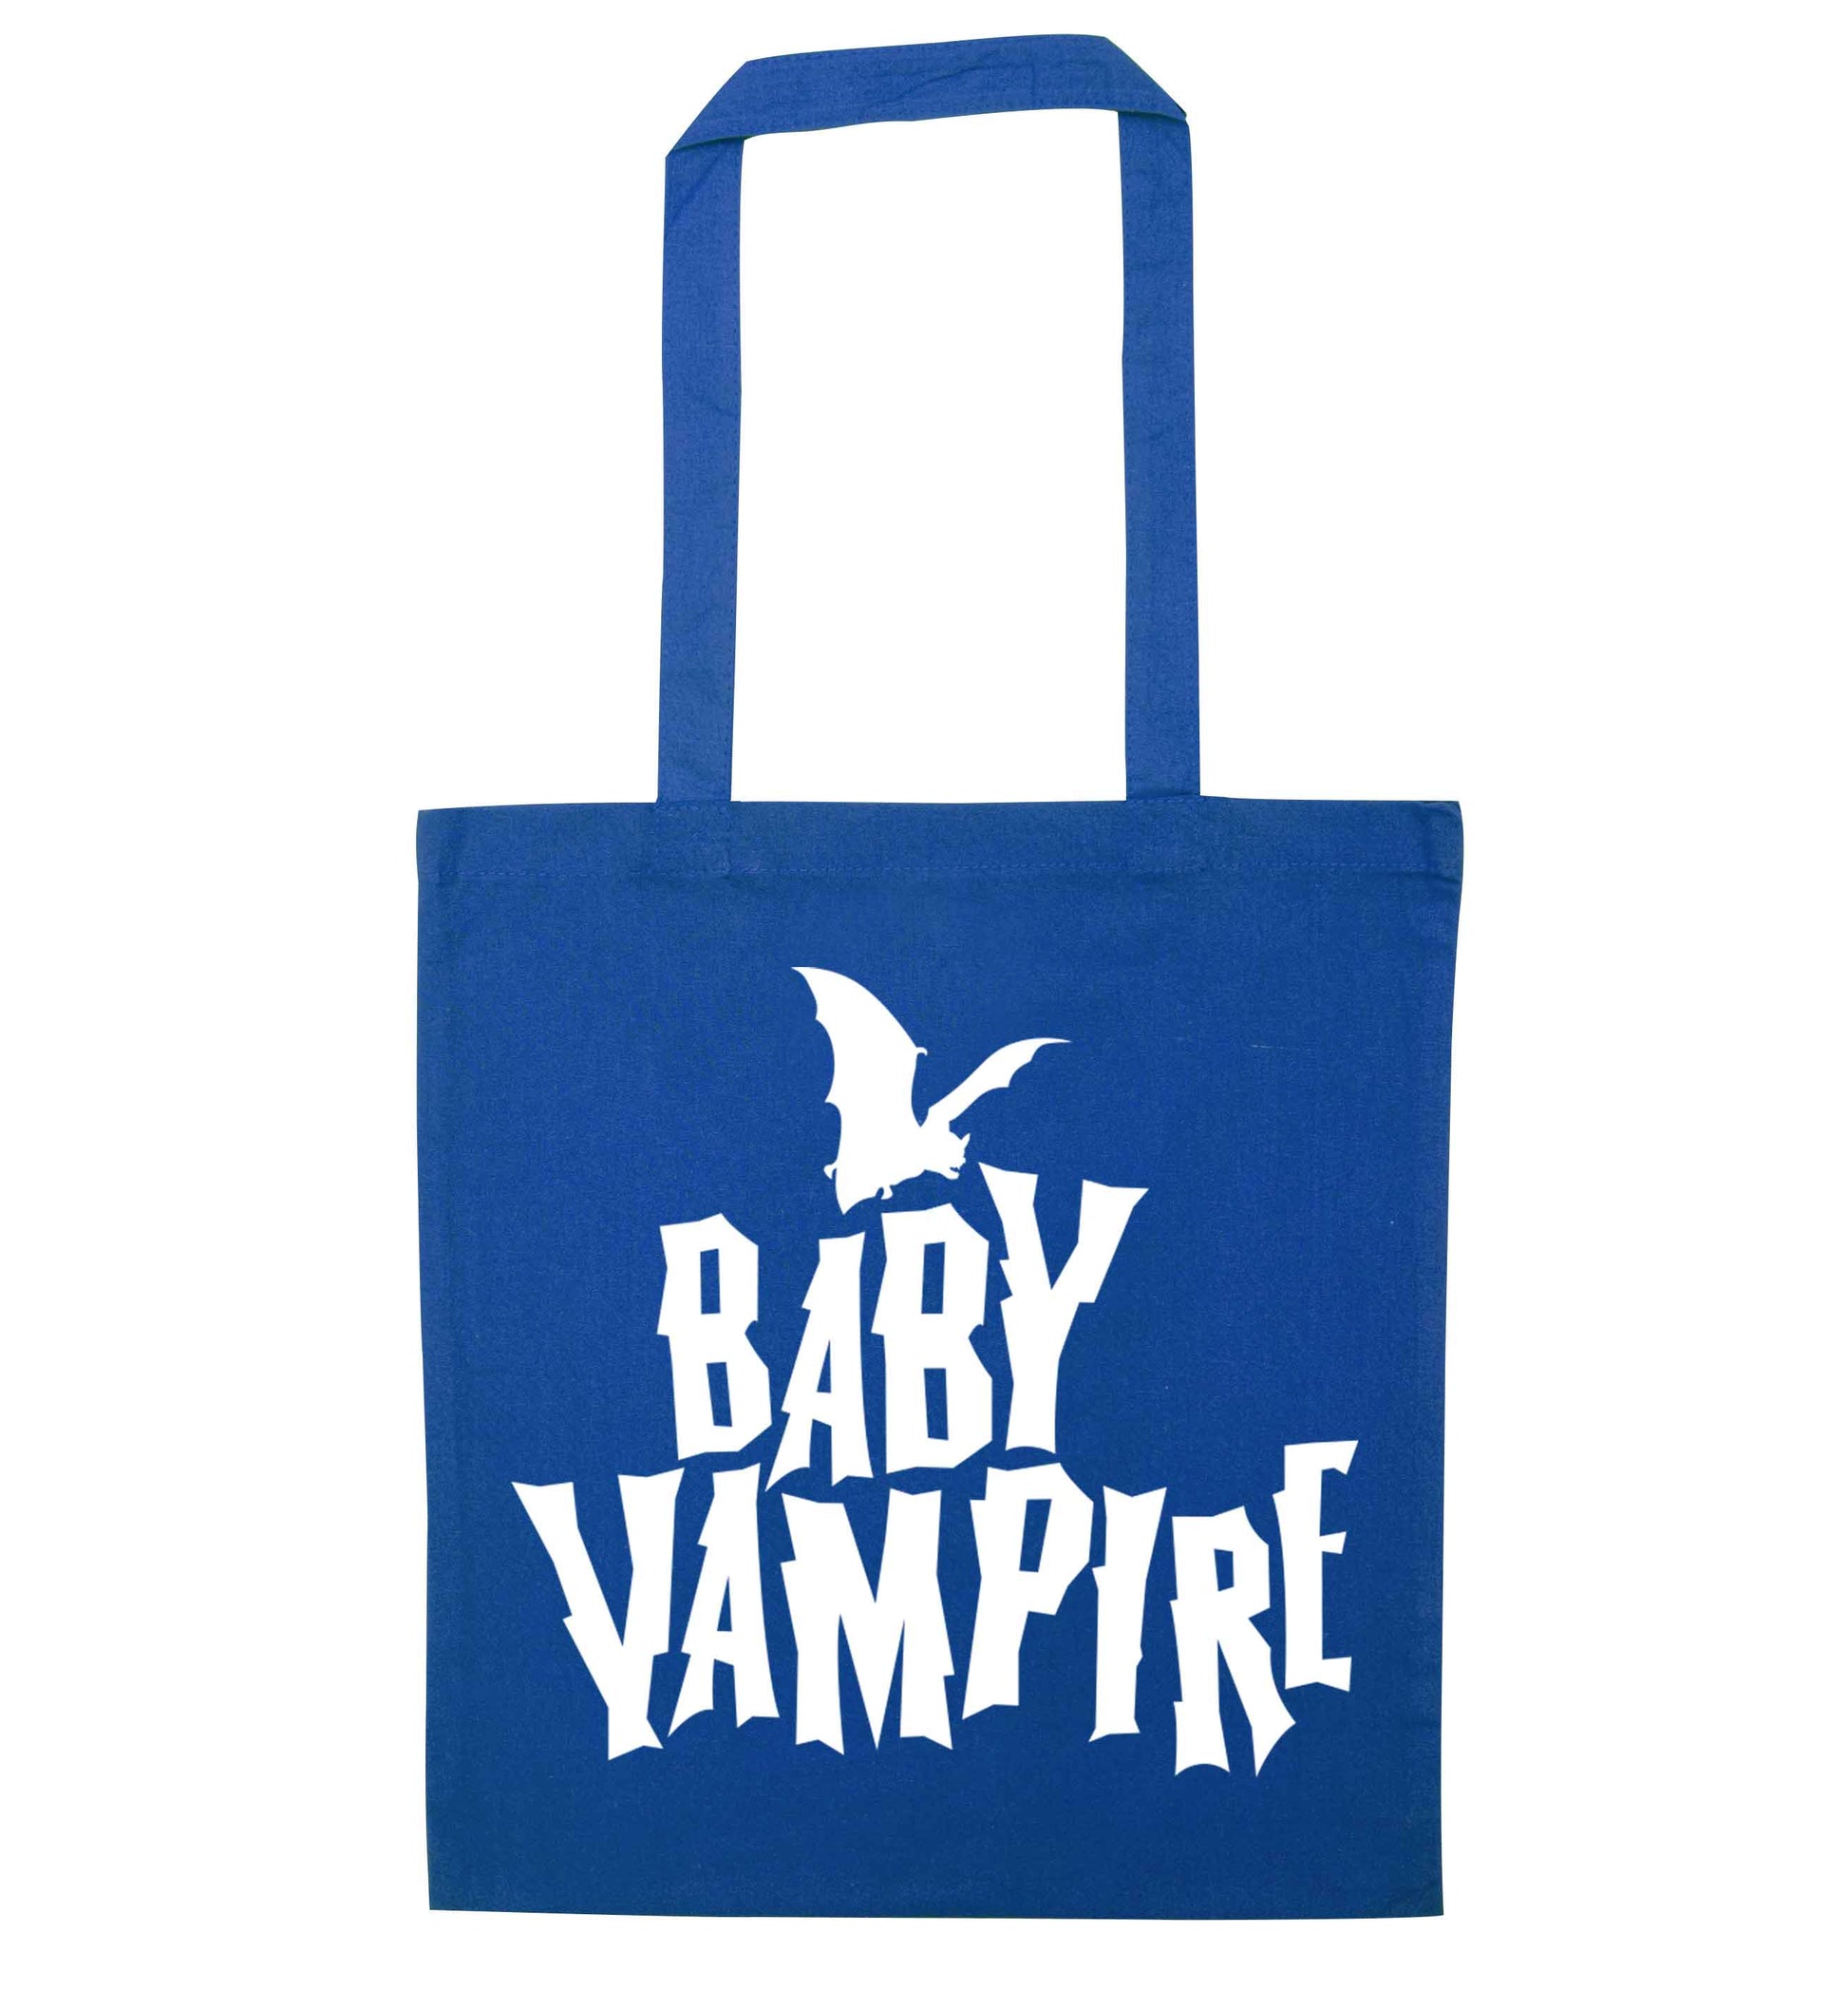 Baby vampire blue tote bag